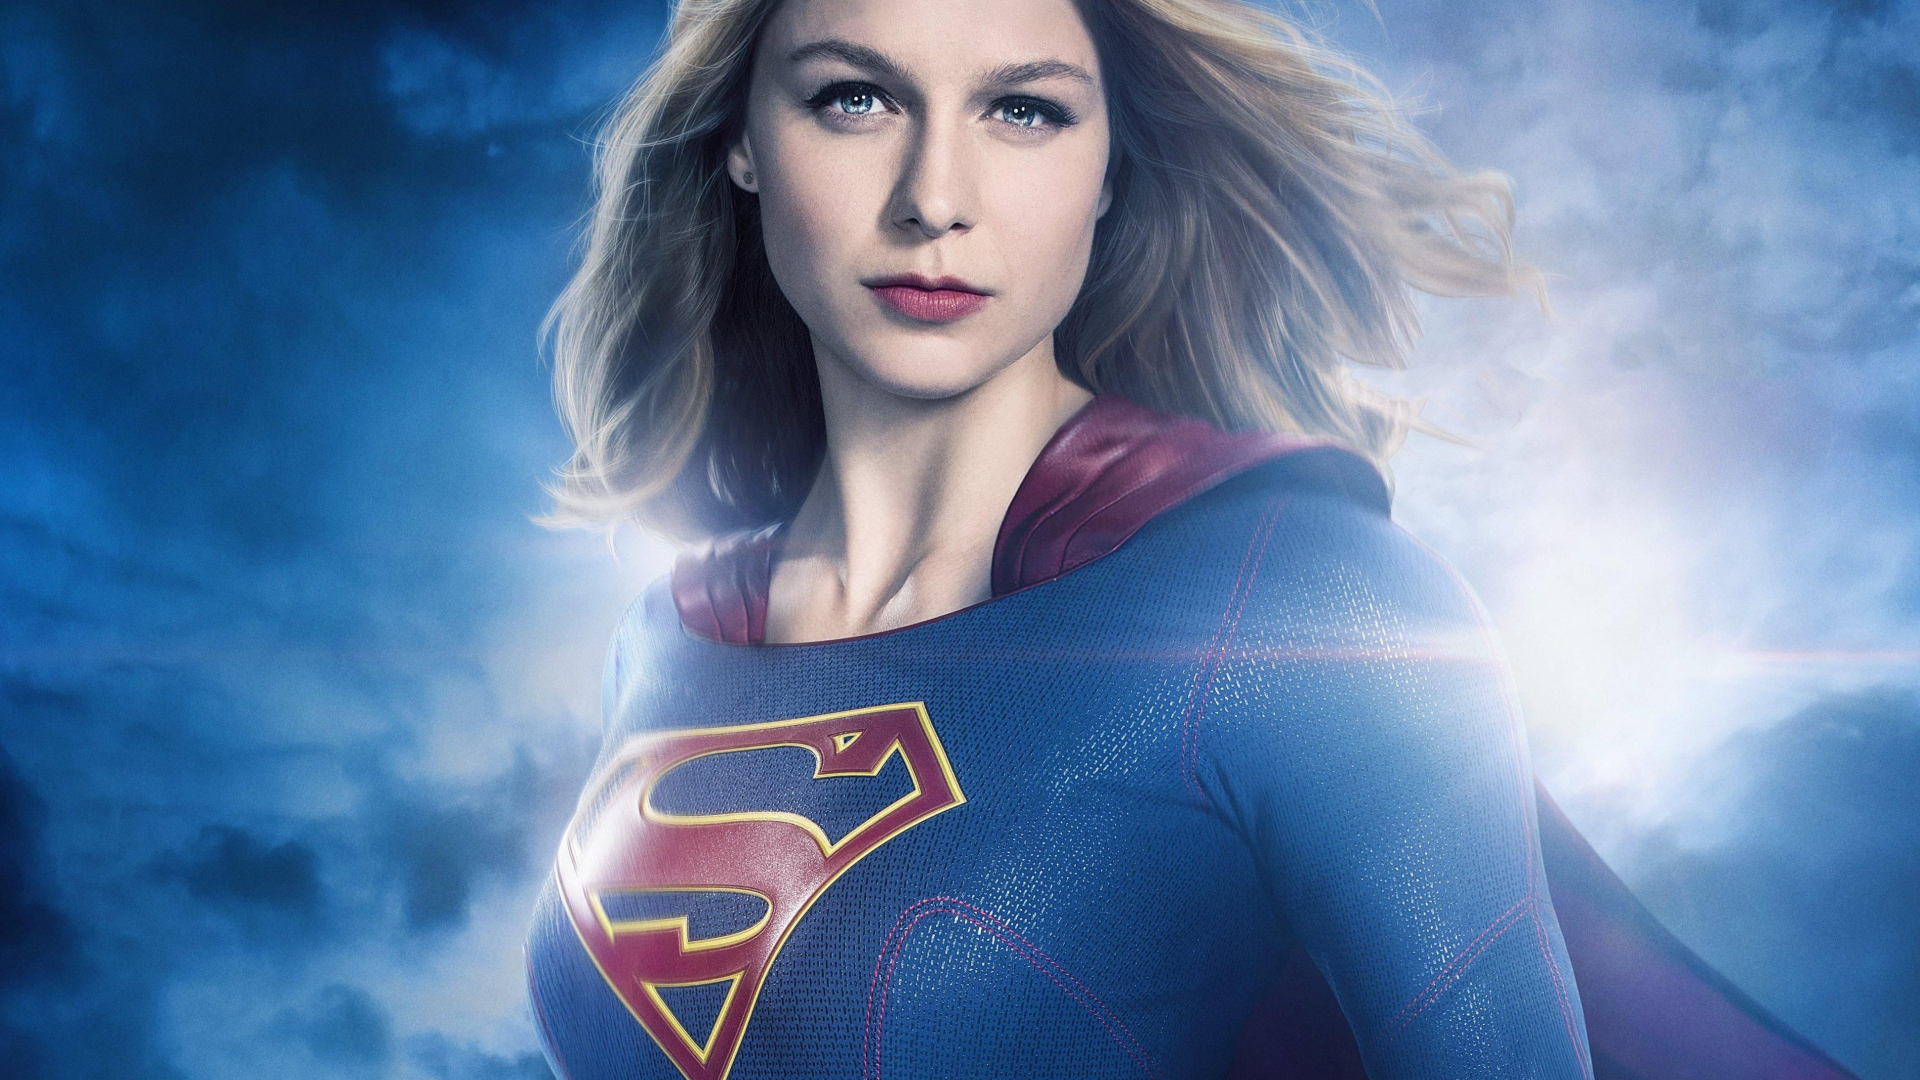 1920x1080 Supergirl Melissa Benoist 1080p Laptop Full Hd Wallpaper Hd Celebrities 4k Wallpapers